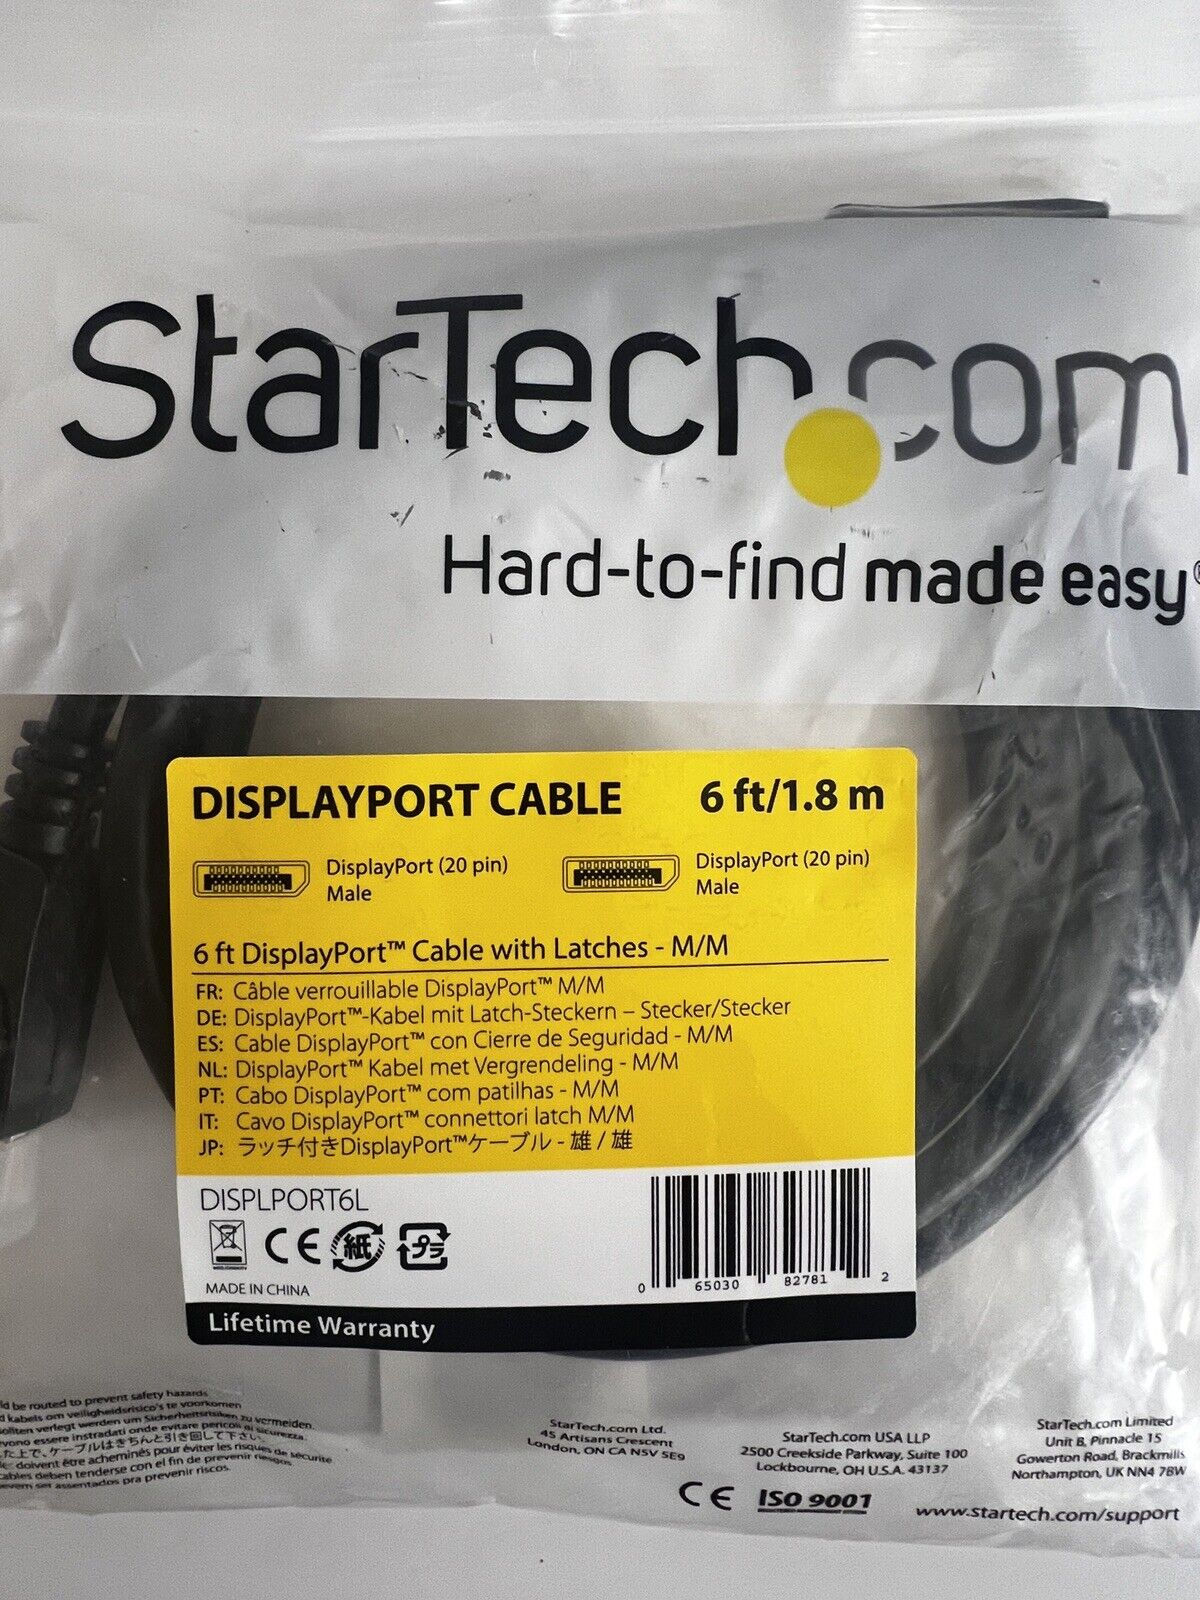 StarTech 20Gbps Thunderbolt 3 USB-C to USB-C Cable - 6.5ft/2m - Black - 4k 60Hz